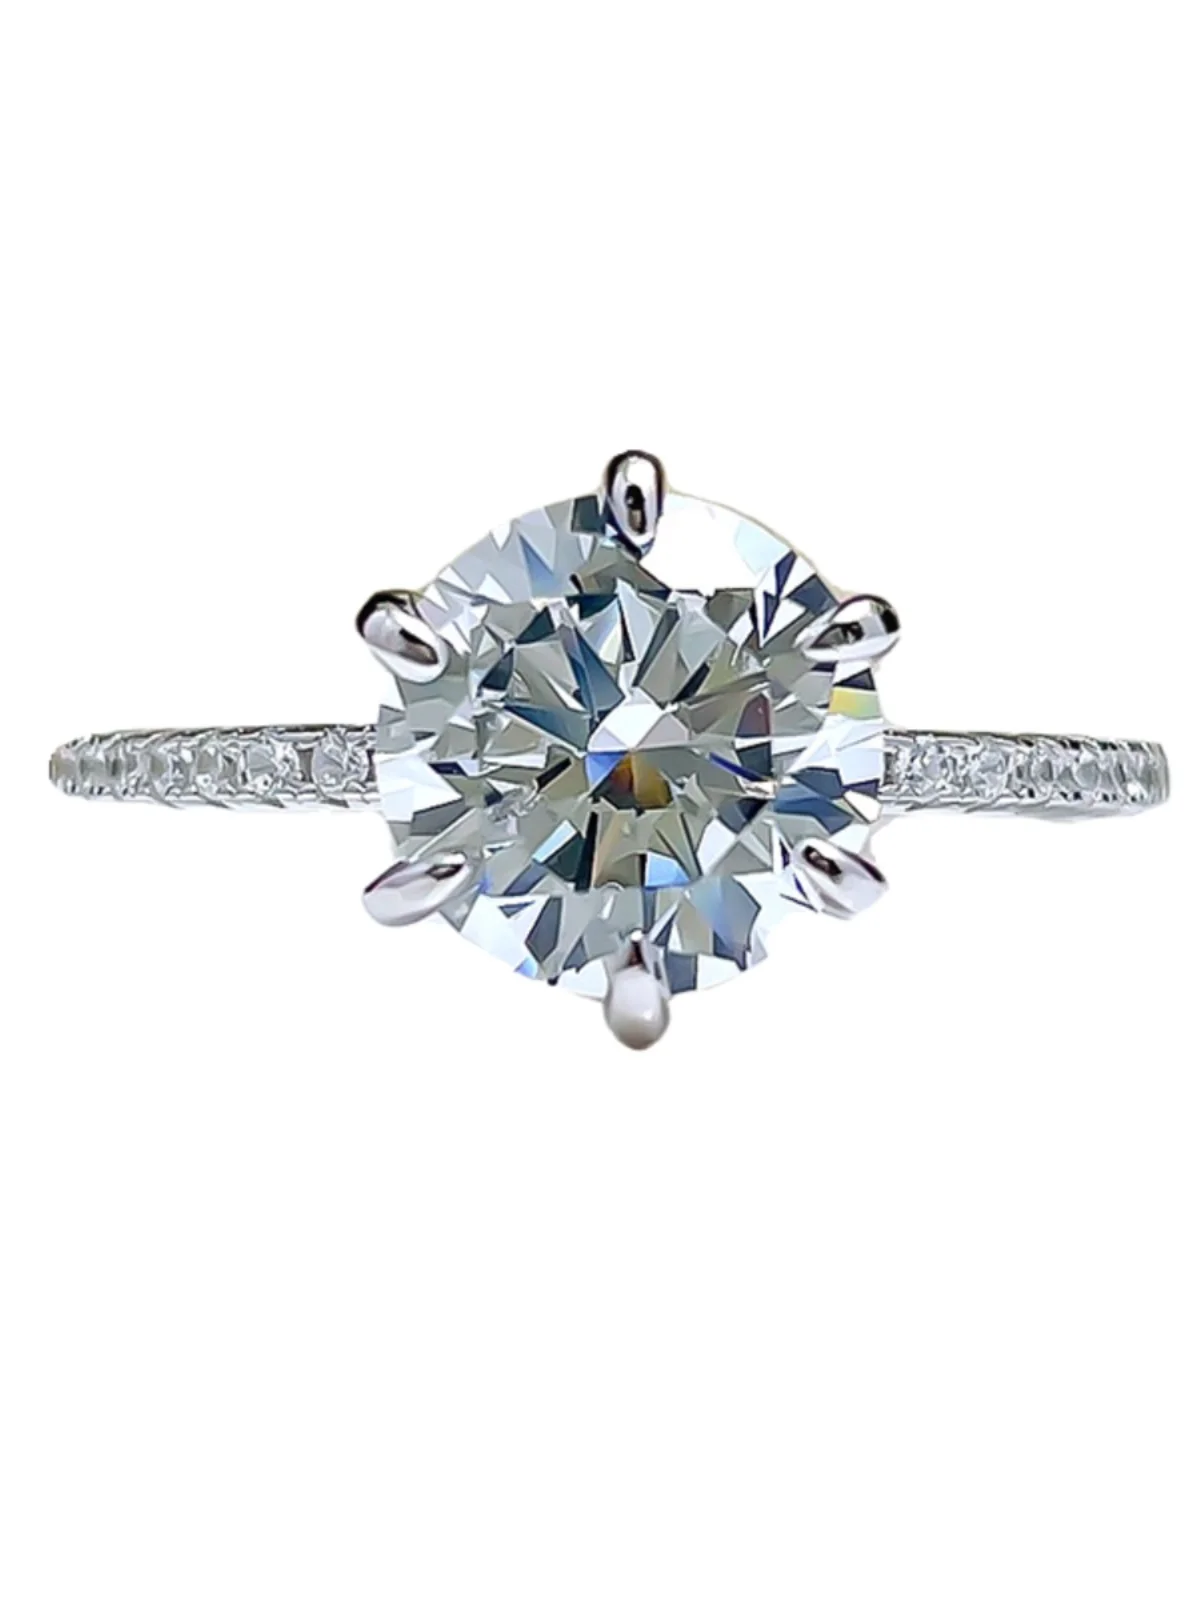 mencheese-flash-2-karat-simulation-diamond-ring-high-carbon-diamond-925-silver-non-fading-hand-jewelry